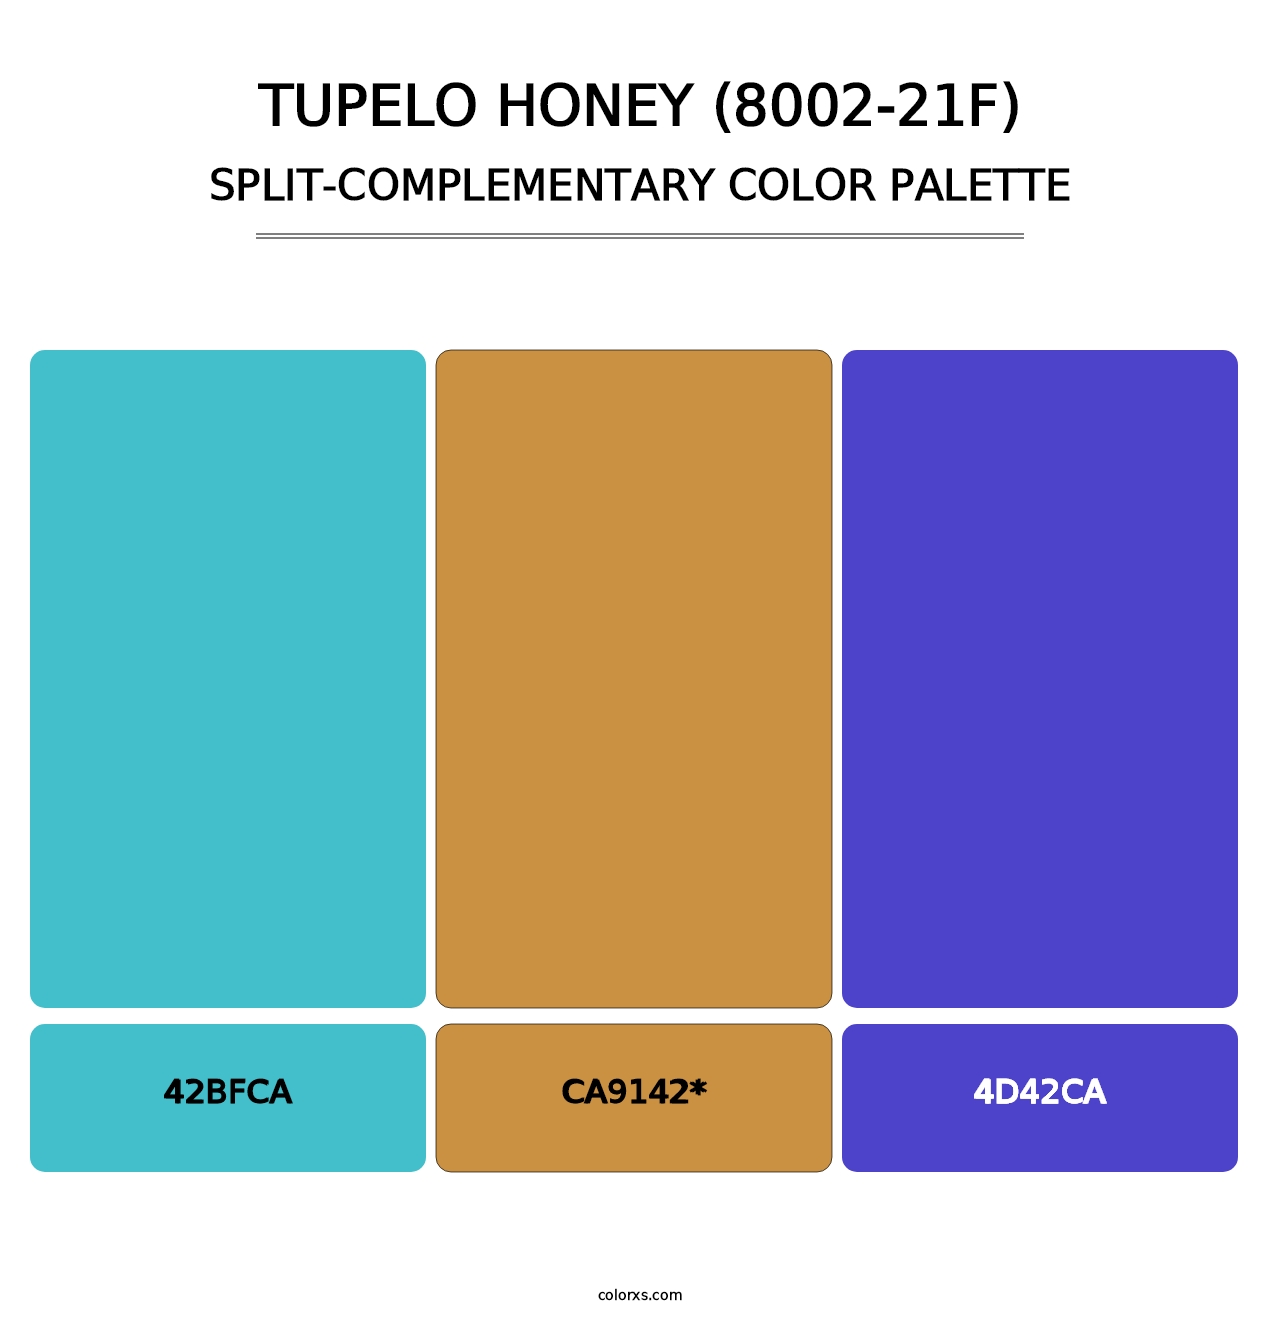 Tupelo Honey (8002-21F) - Split-Complementary Color Palette